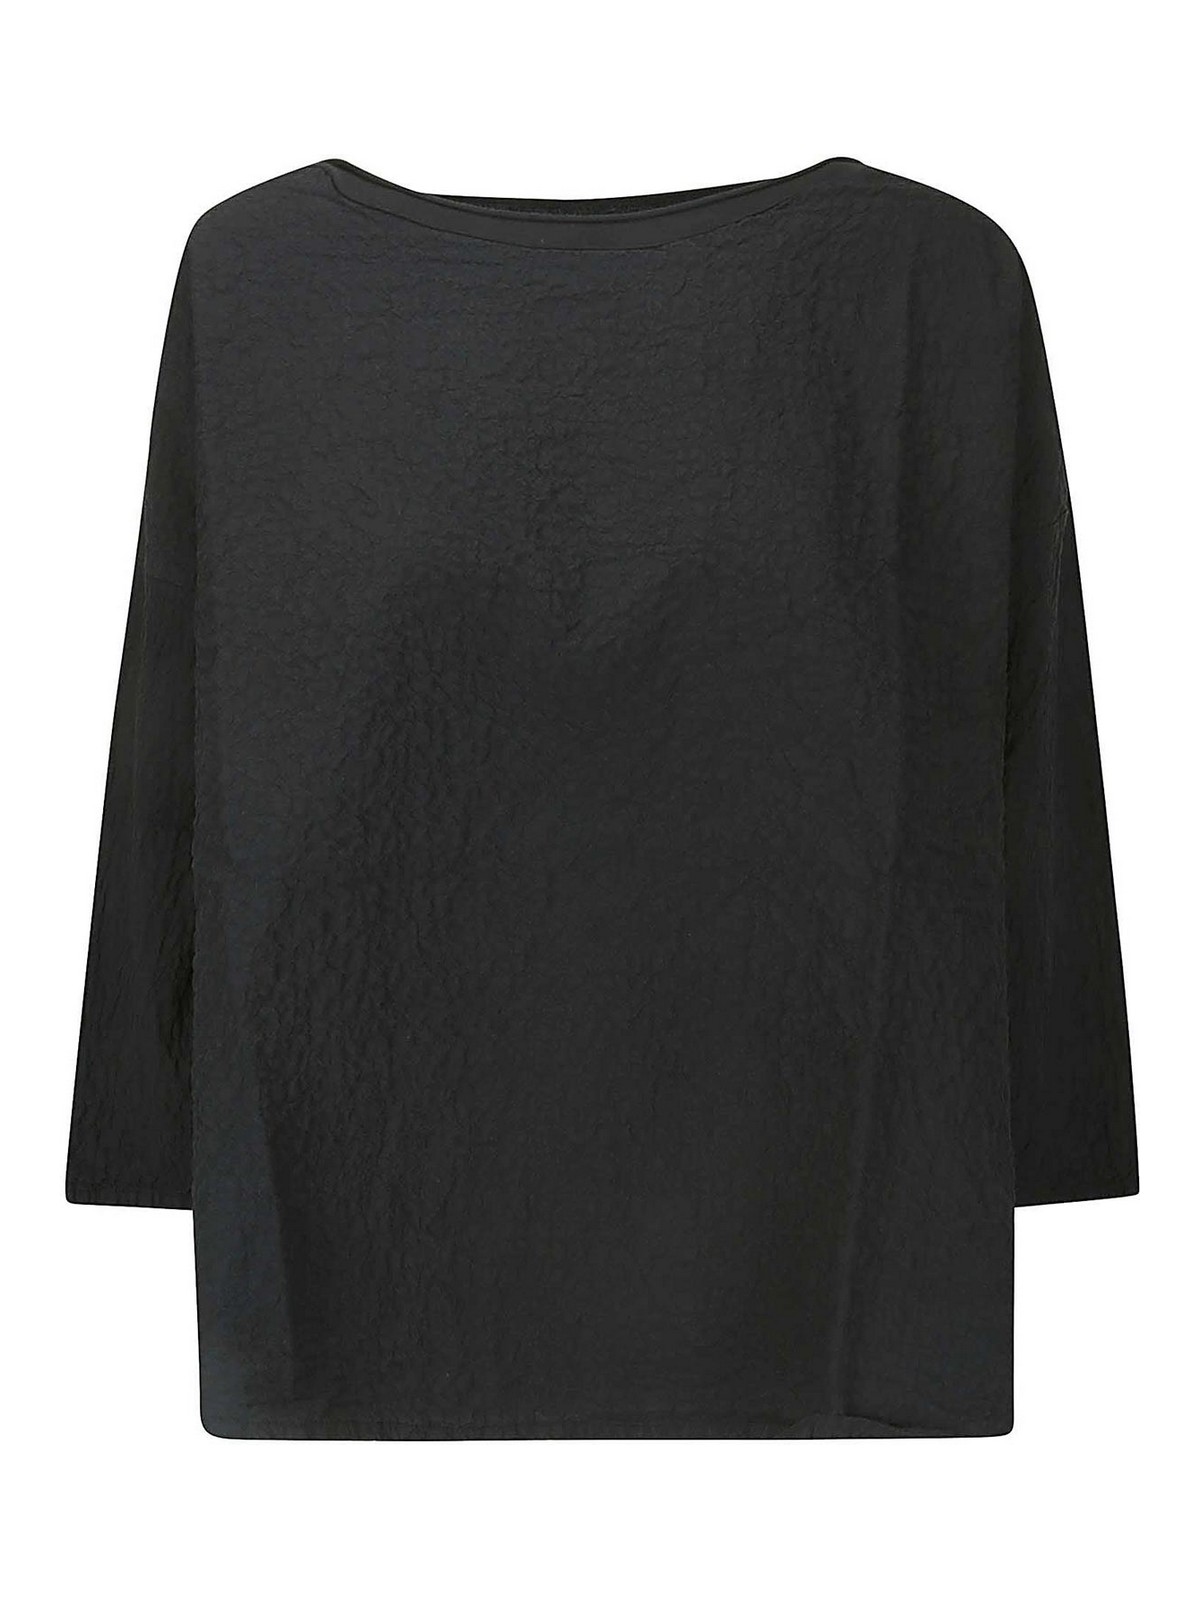 Labo.art Light Sweater In Black